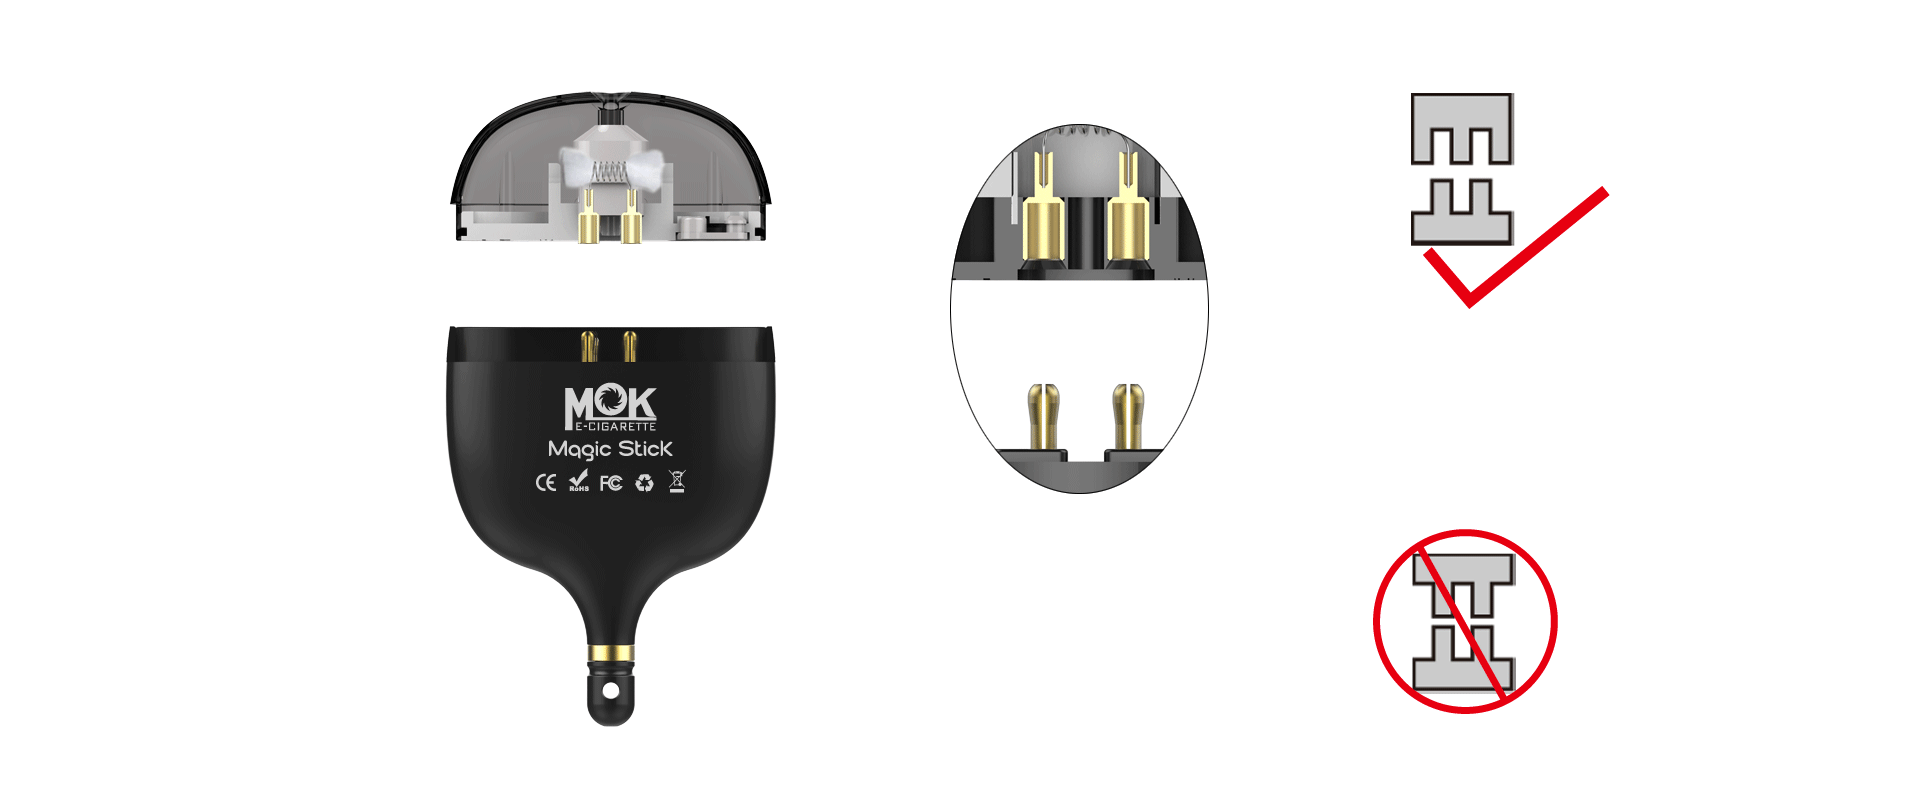 MOK Magic Stick Exclusive conductive connection patent technology